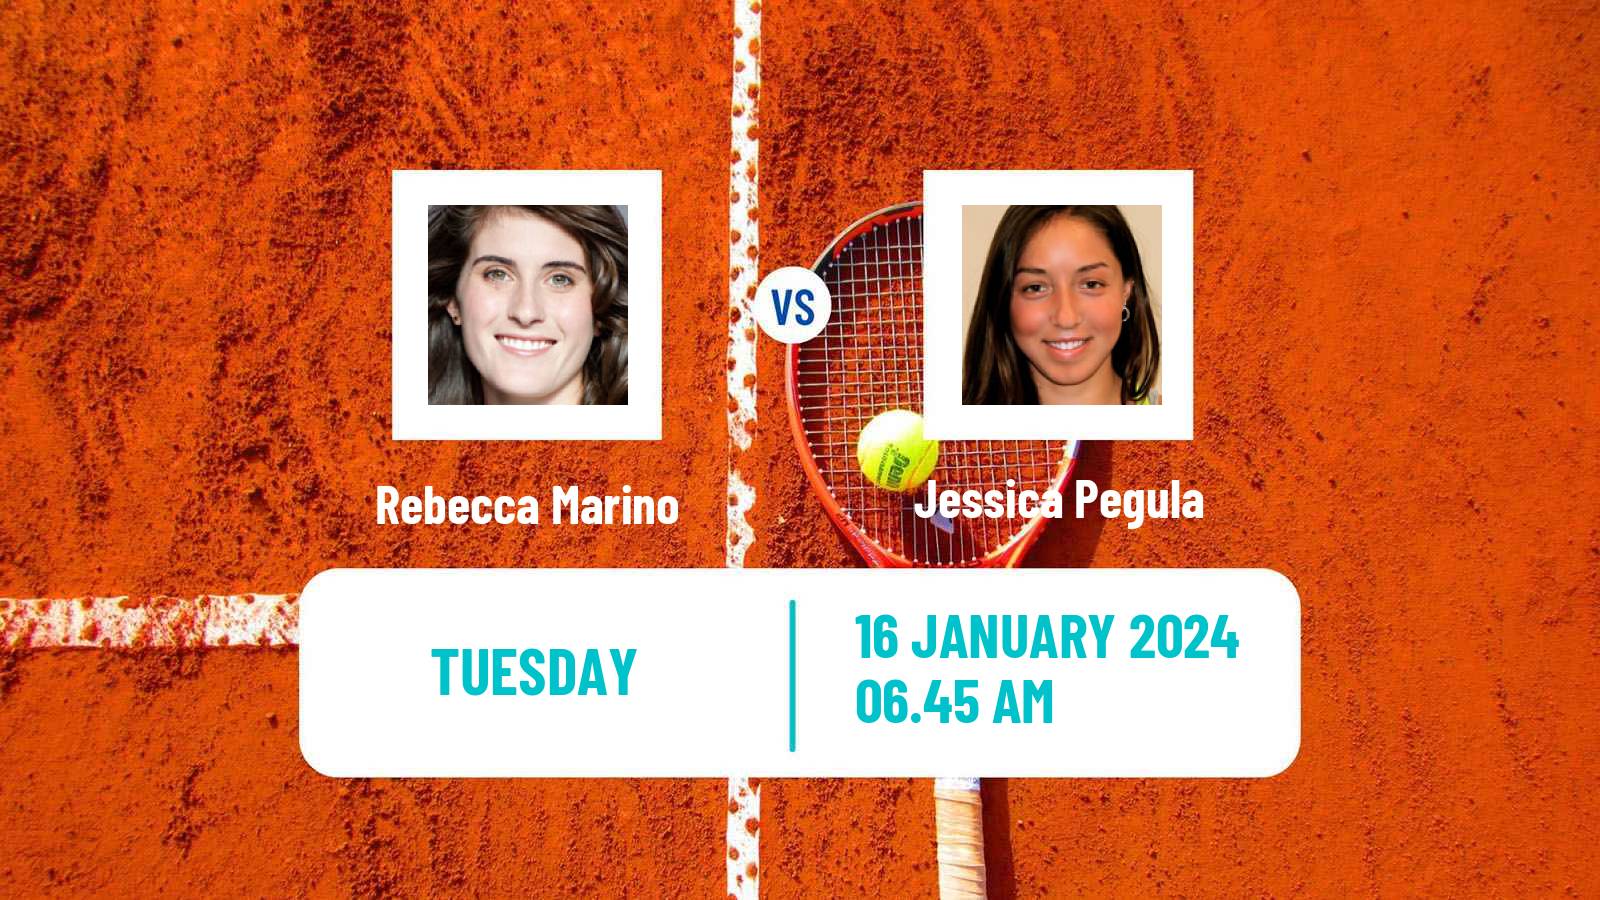 Tennis WTA Australian Open Rebecca Marino - Jessica Pegula